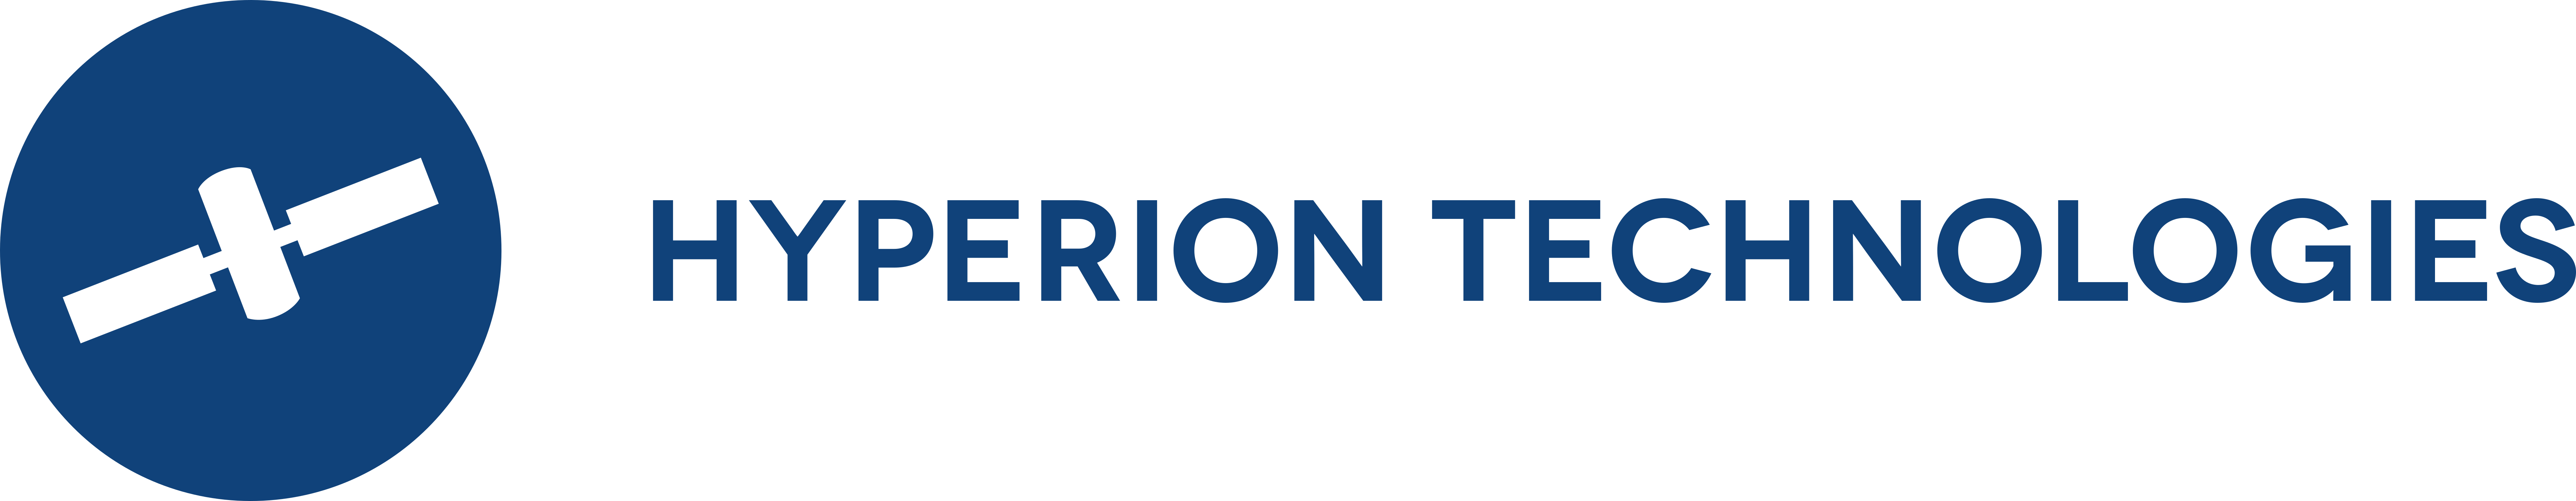 Hyperion Technologies Logo